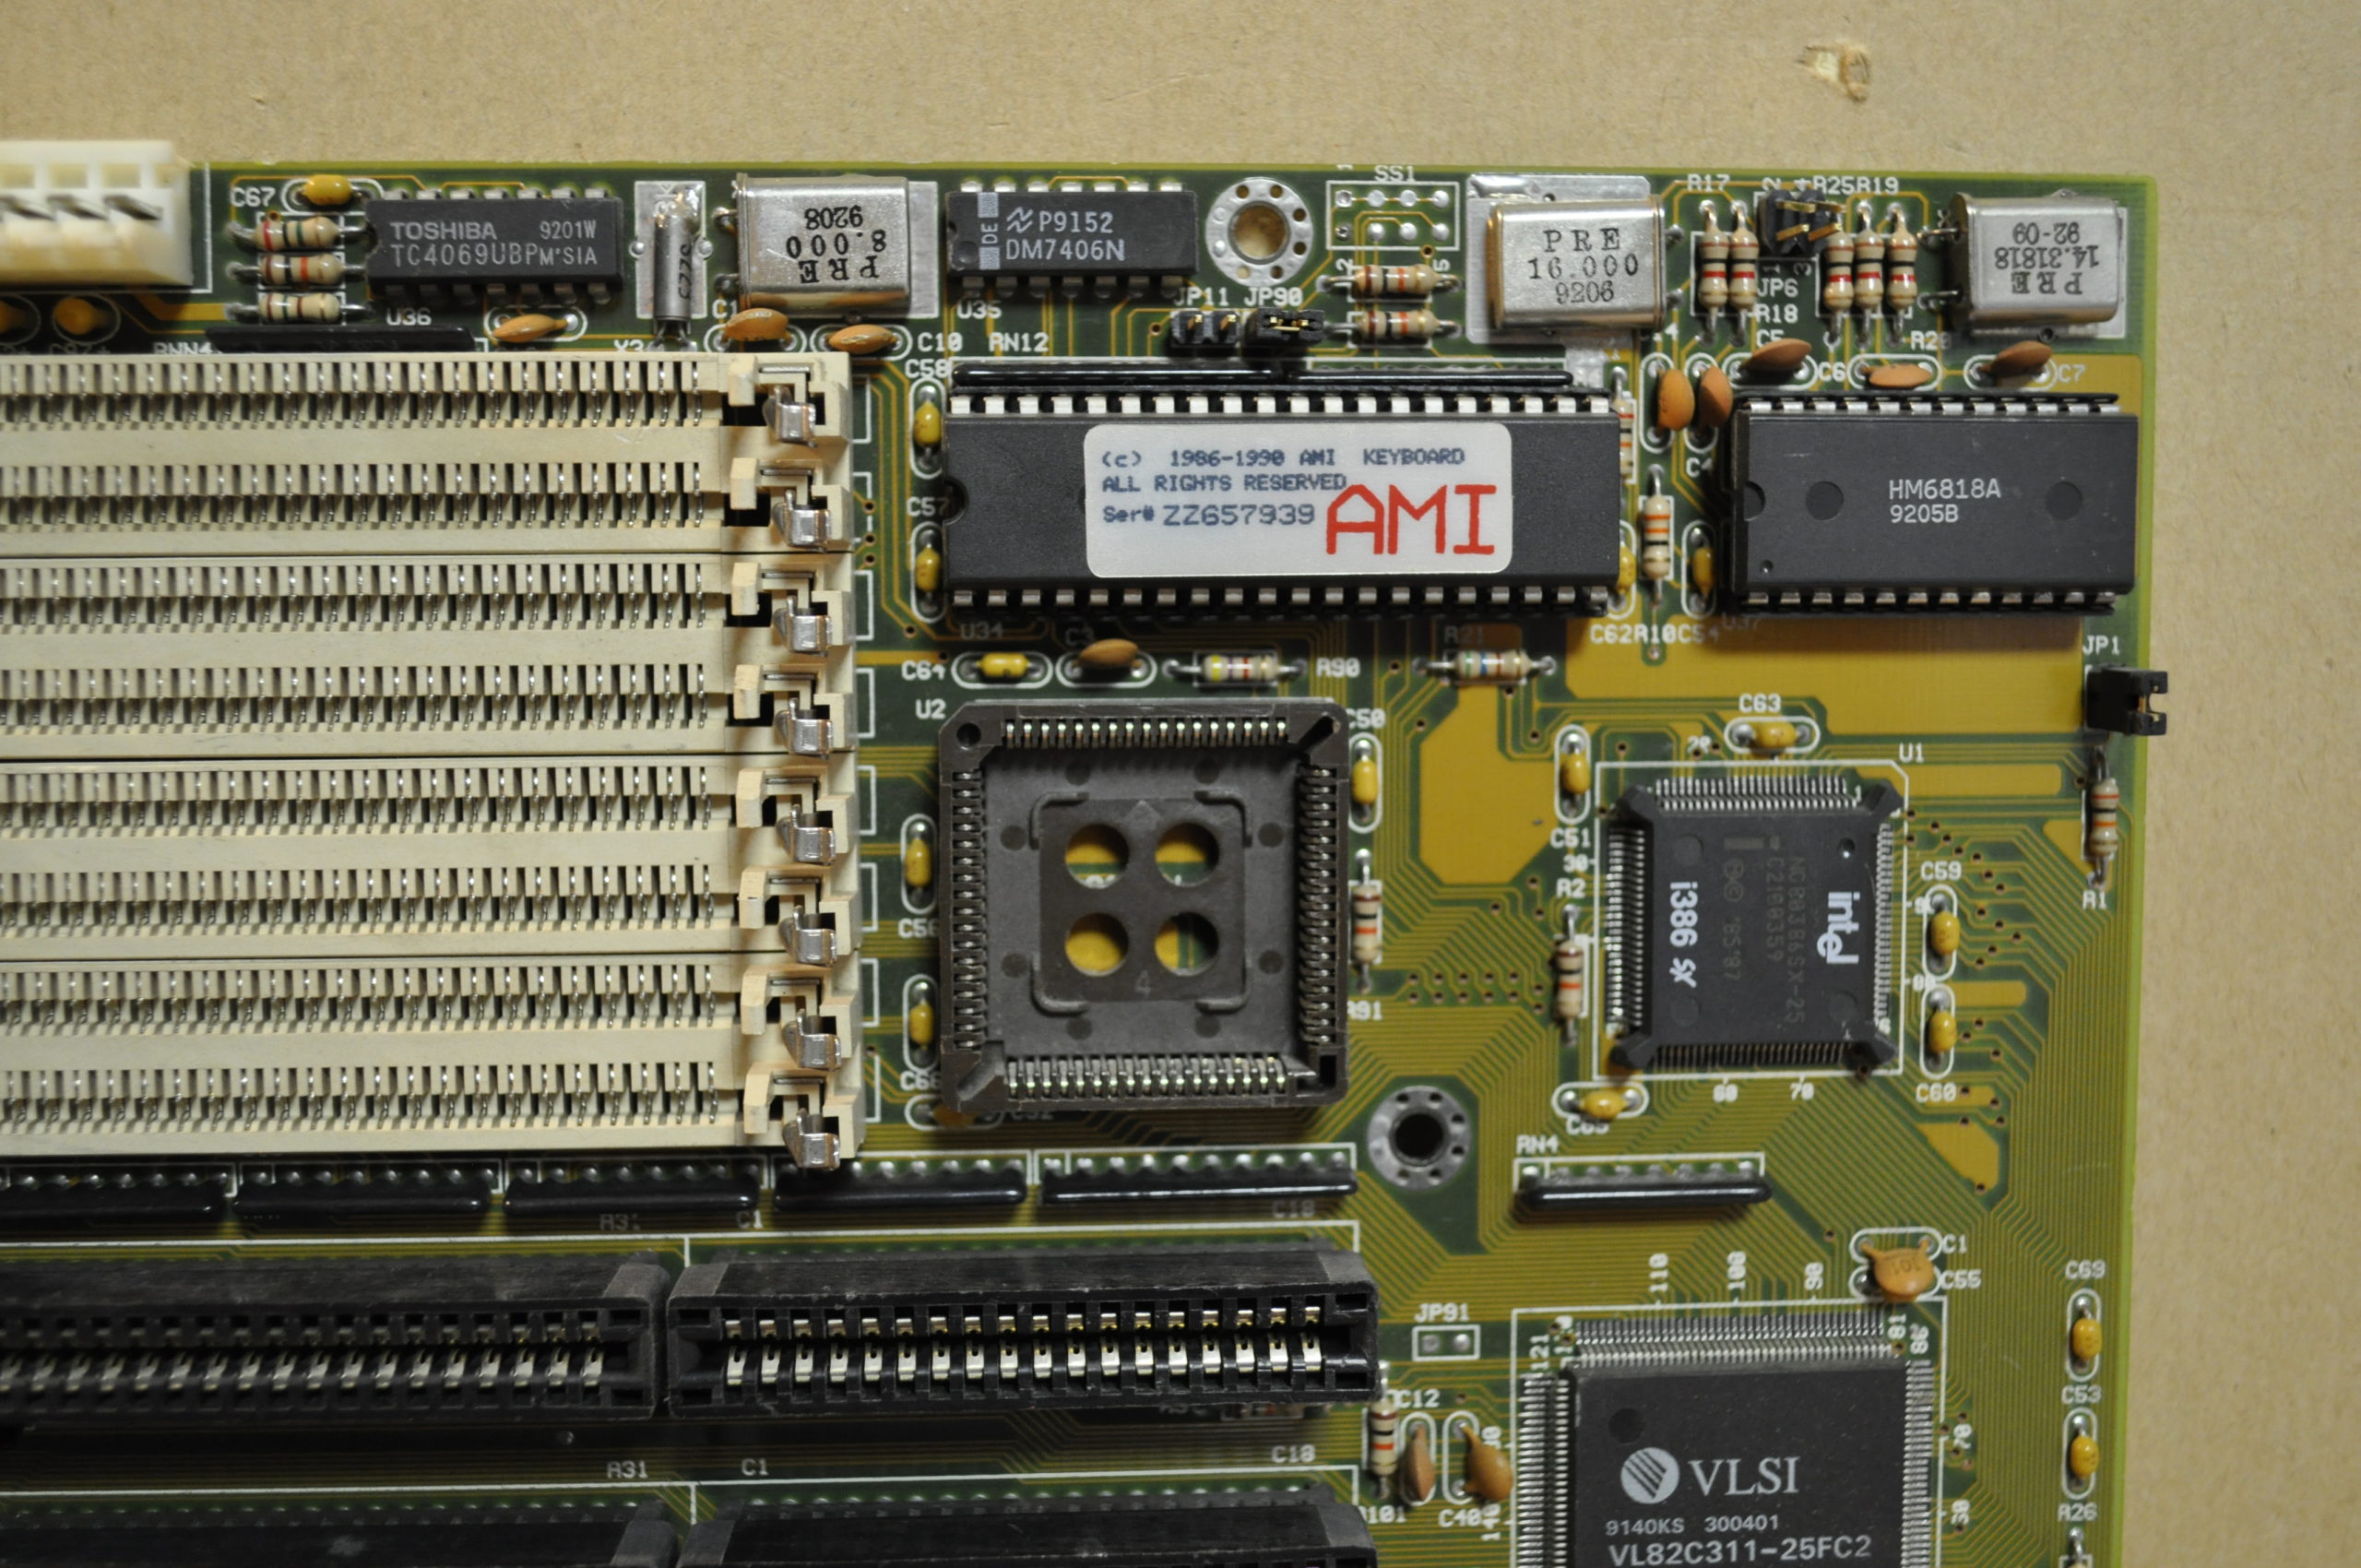 vlsi-386-motherboard-8-x-72-pin-simm-s-7-x-isa-slots-i386-sx-nc-80386sx